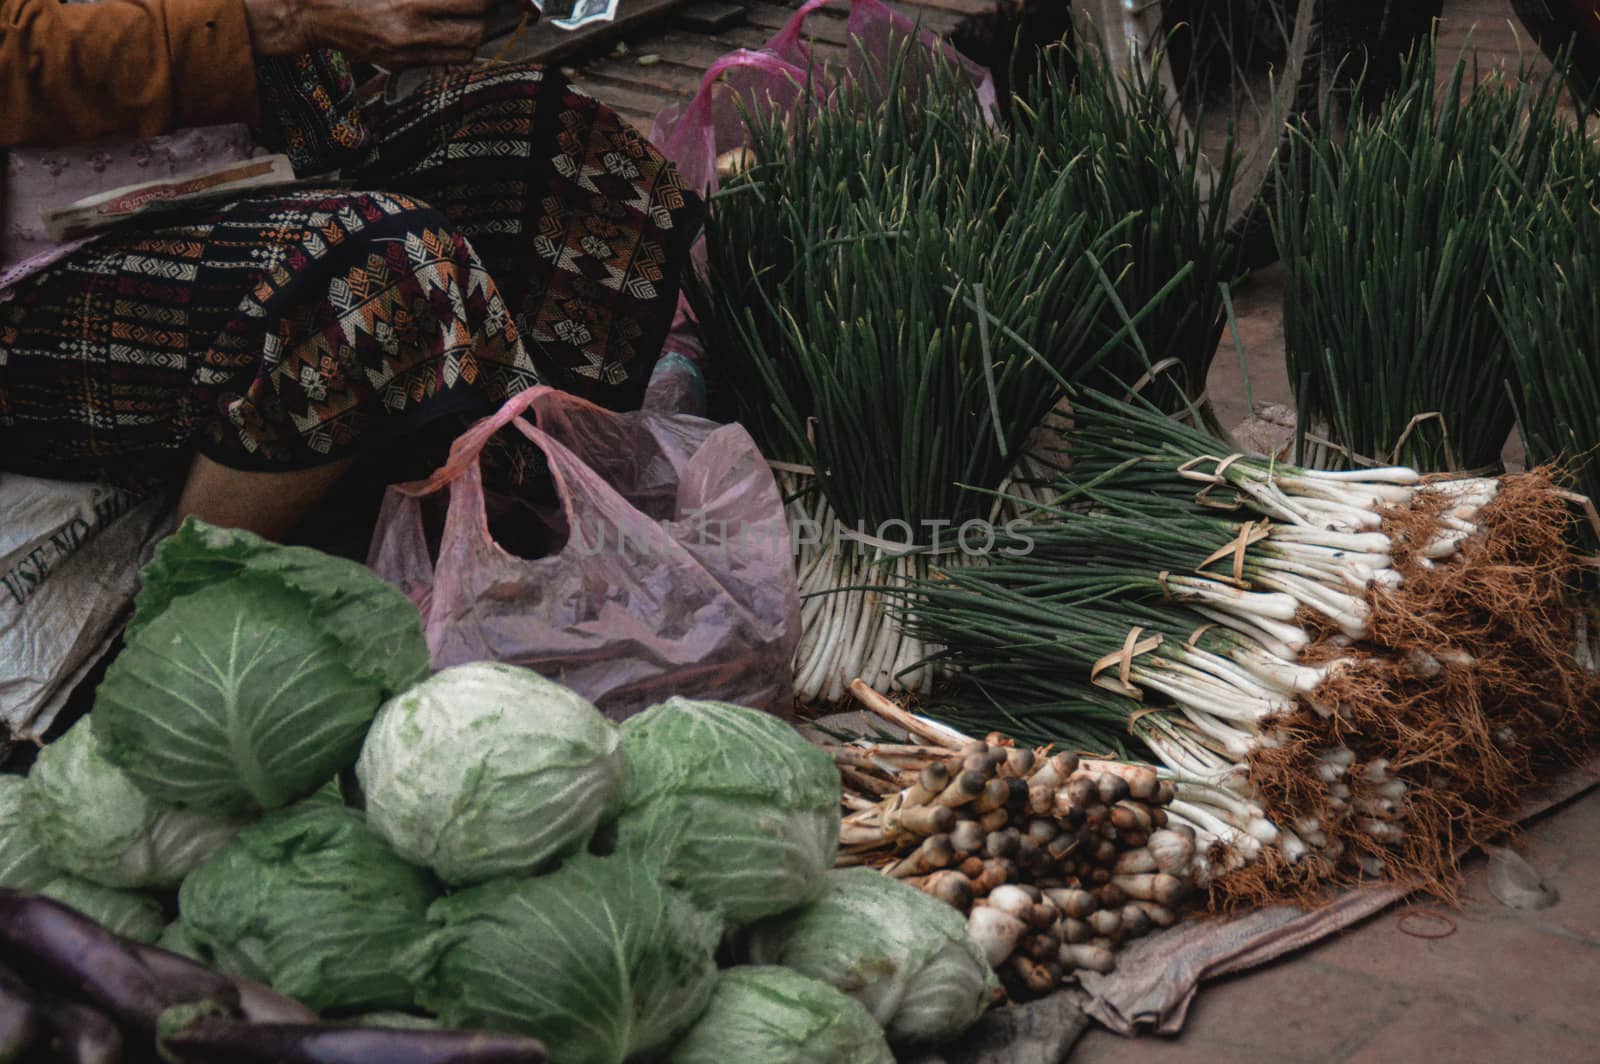 Freshly harvested vegetables in the market by Sonnet15